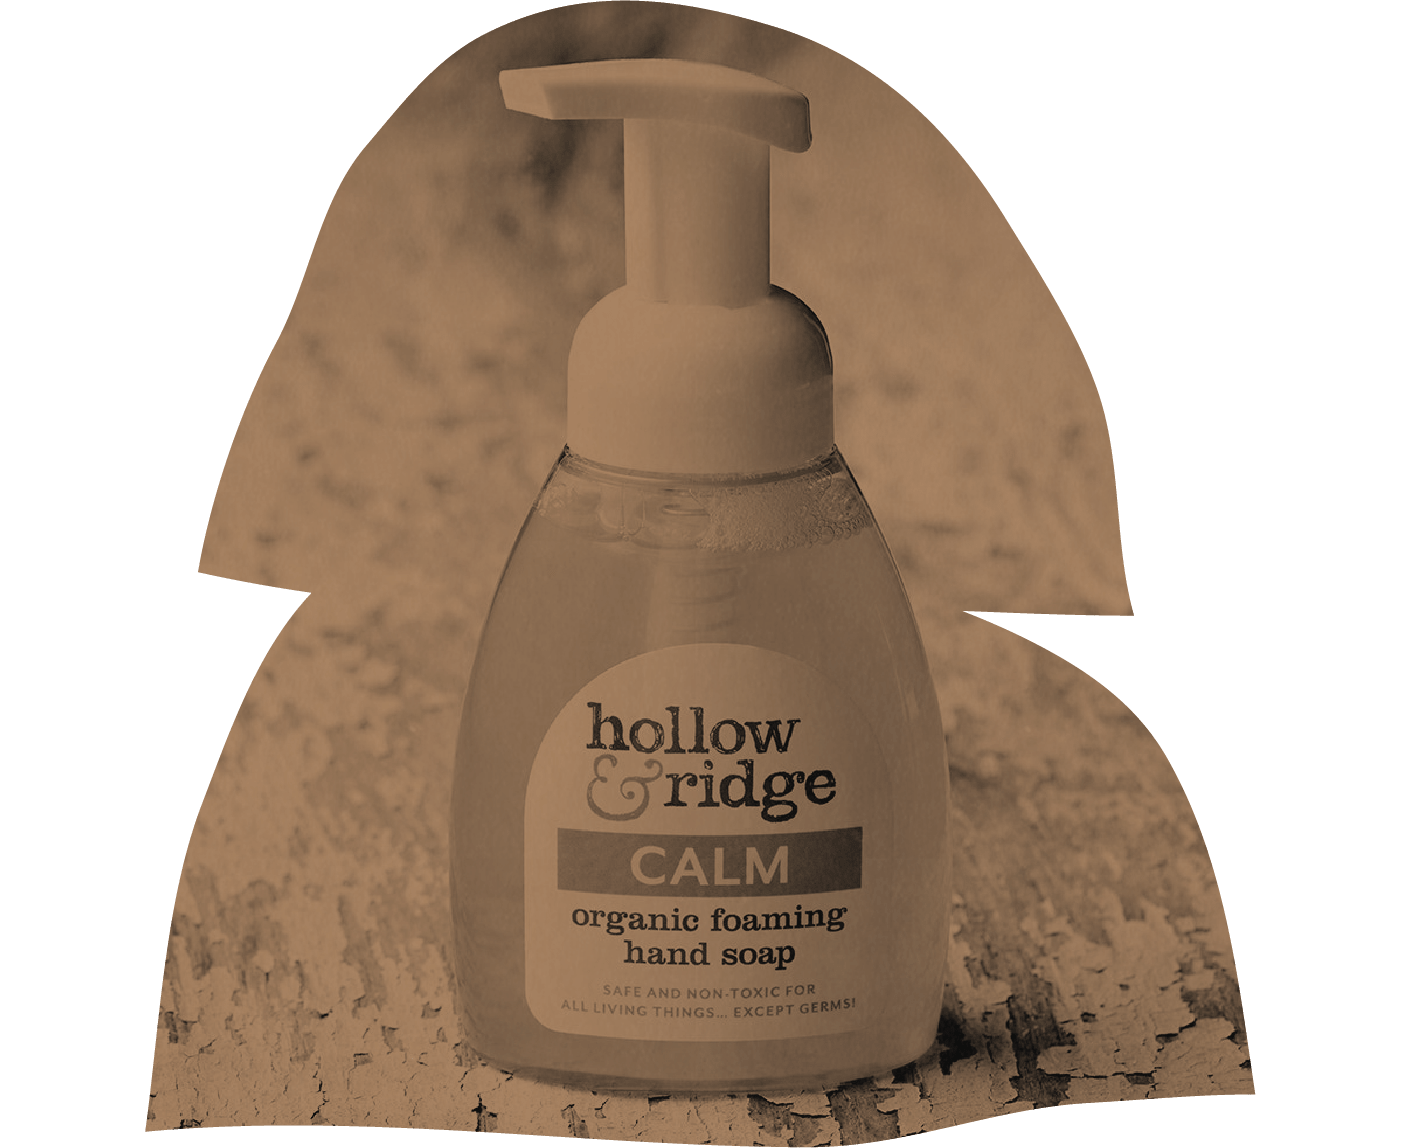 Organic Foaming Hand Soap | Calm, Hollow & Ridge